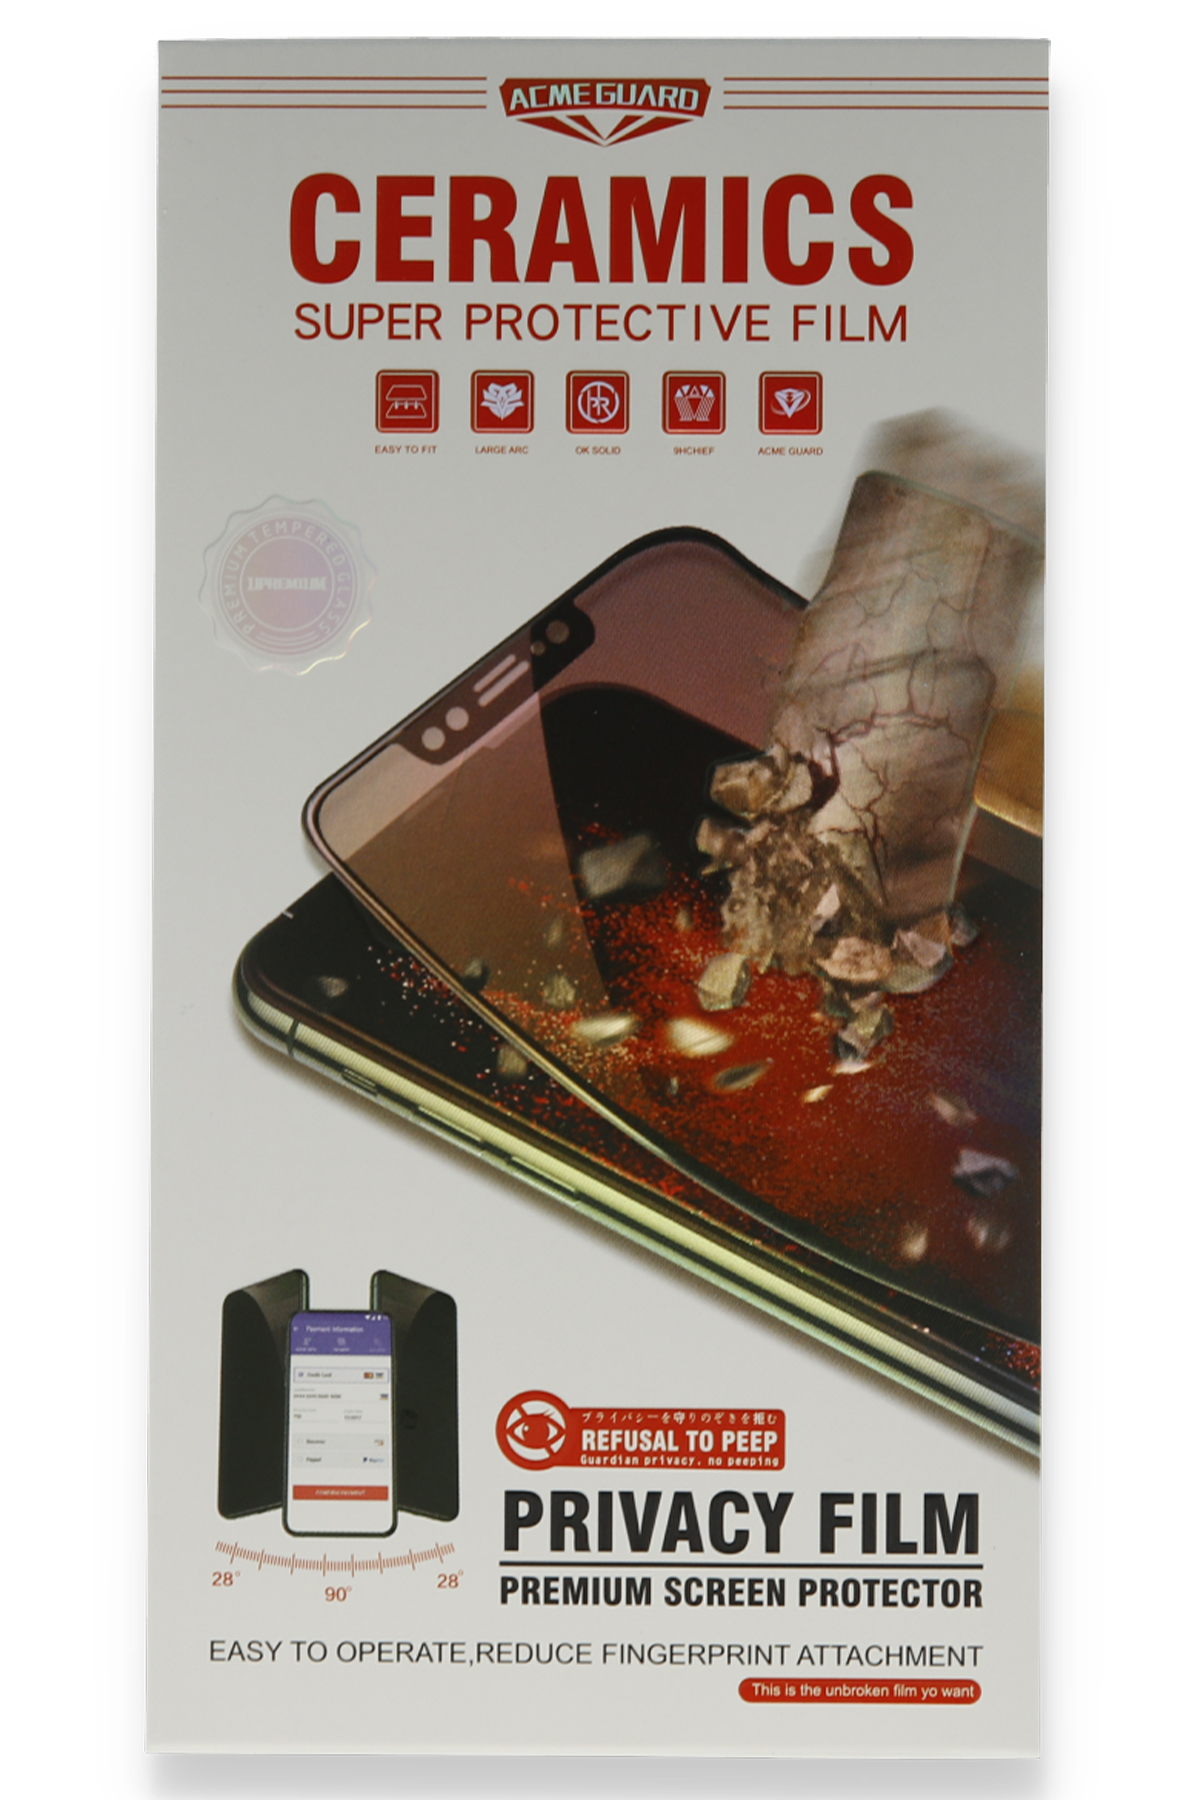 Newface iPhone 11 Kılıf Anka PC Magneticsafe Sert Metal Kapak - Mor